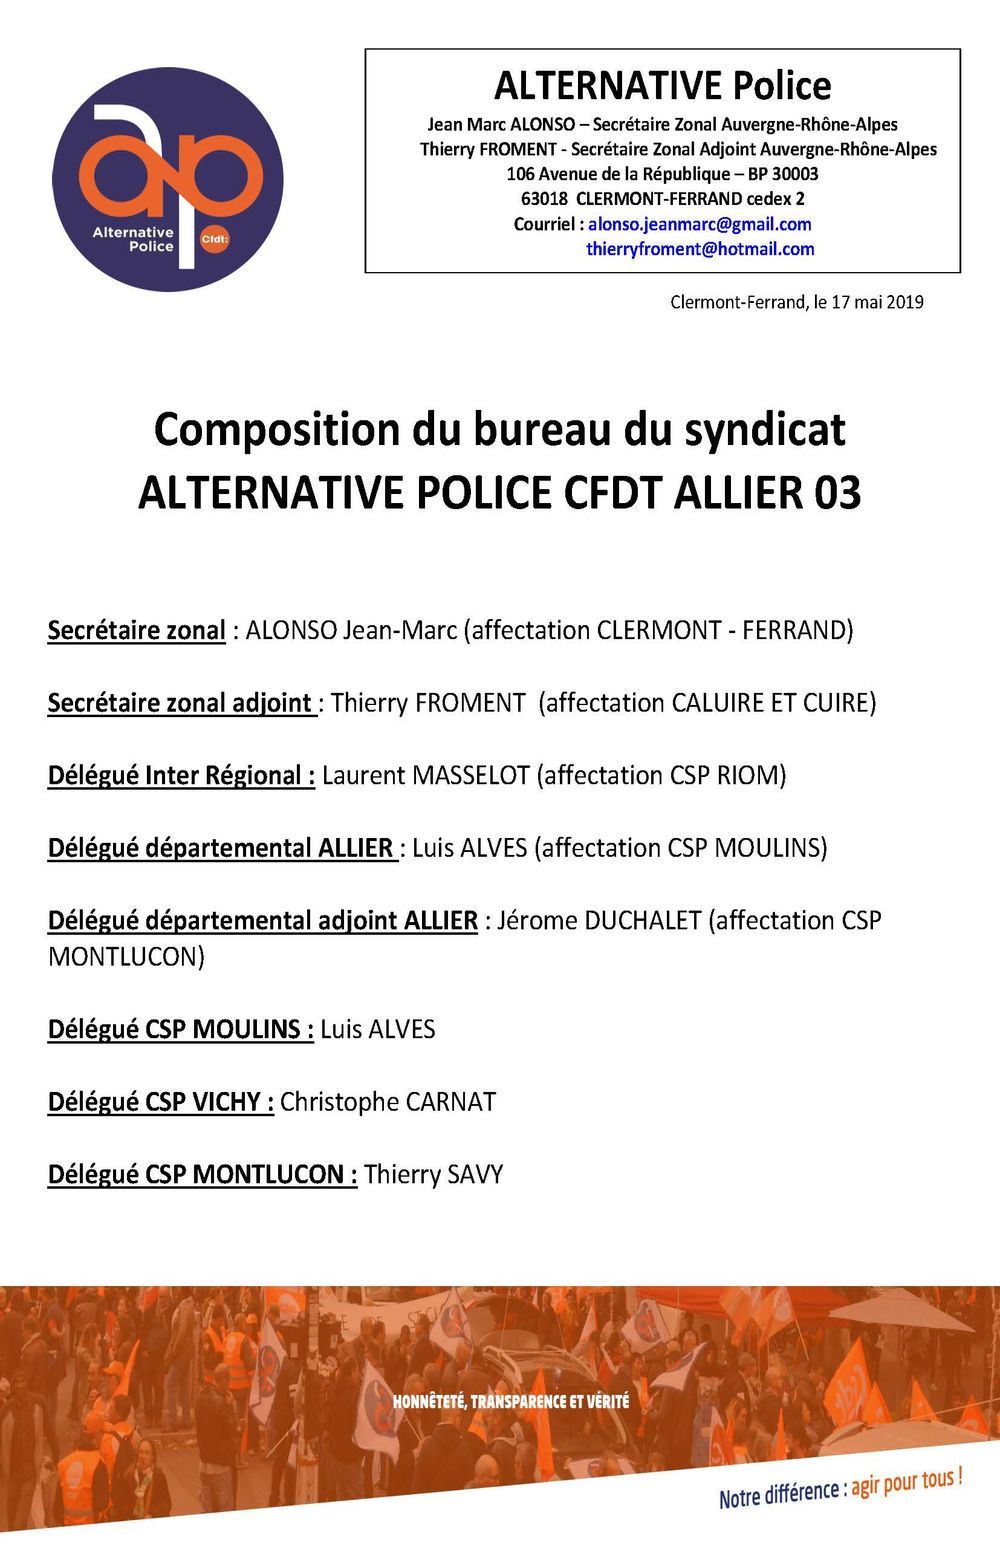 Composition du bureau du syndicat ALTERNATIVE POLICE CFDT ALLIER 03